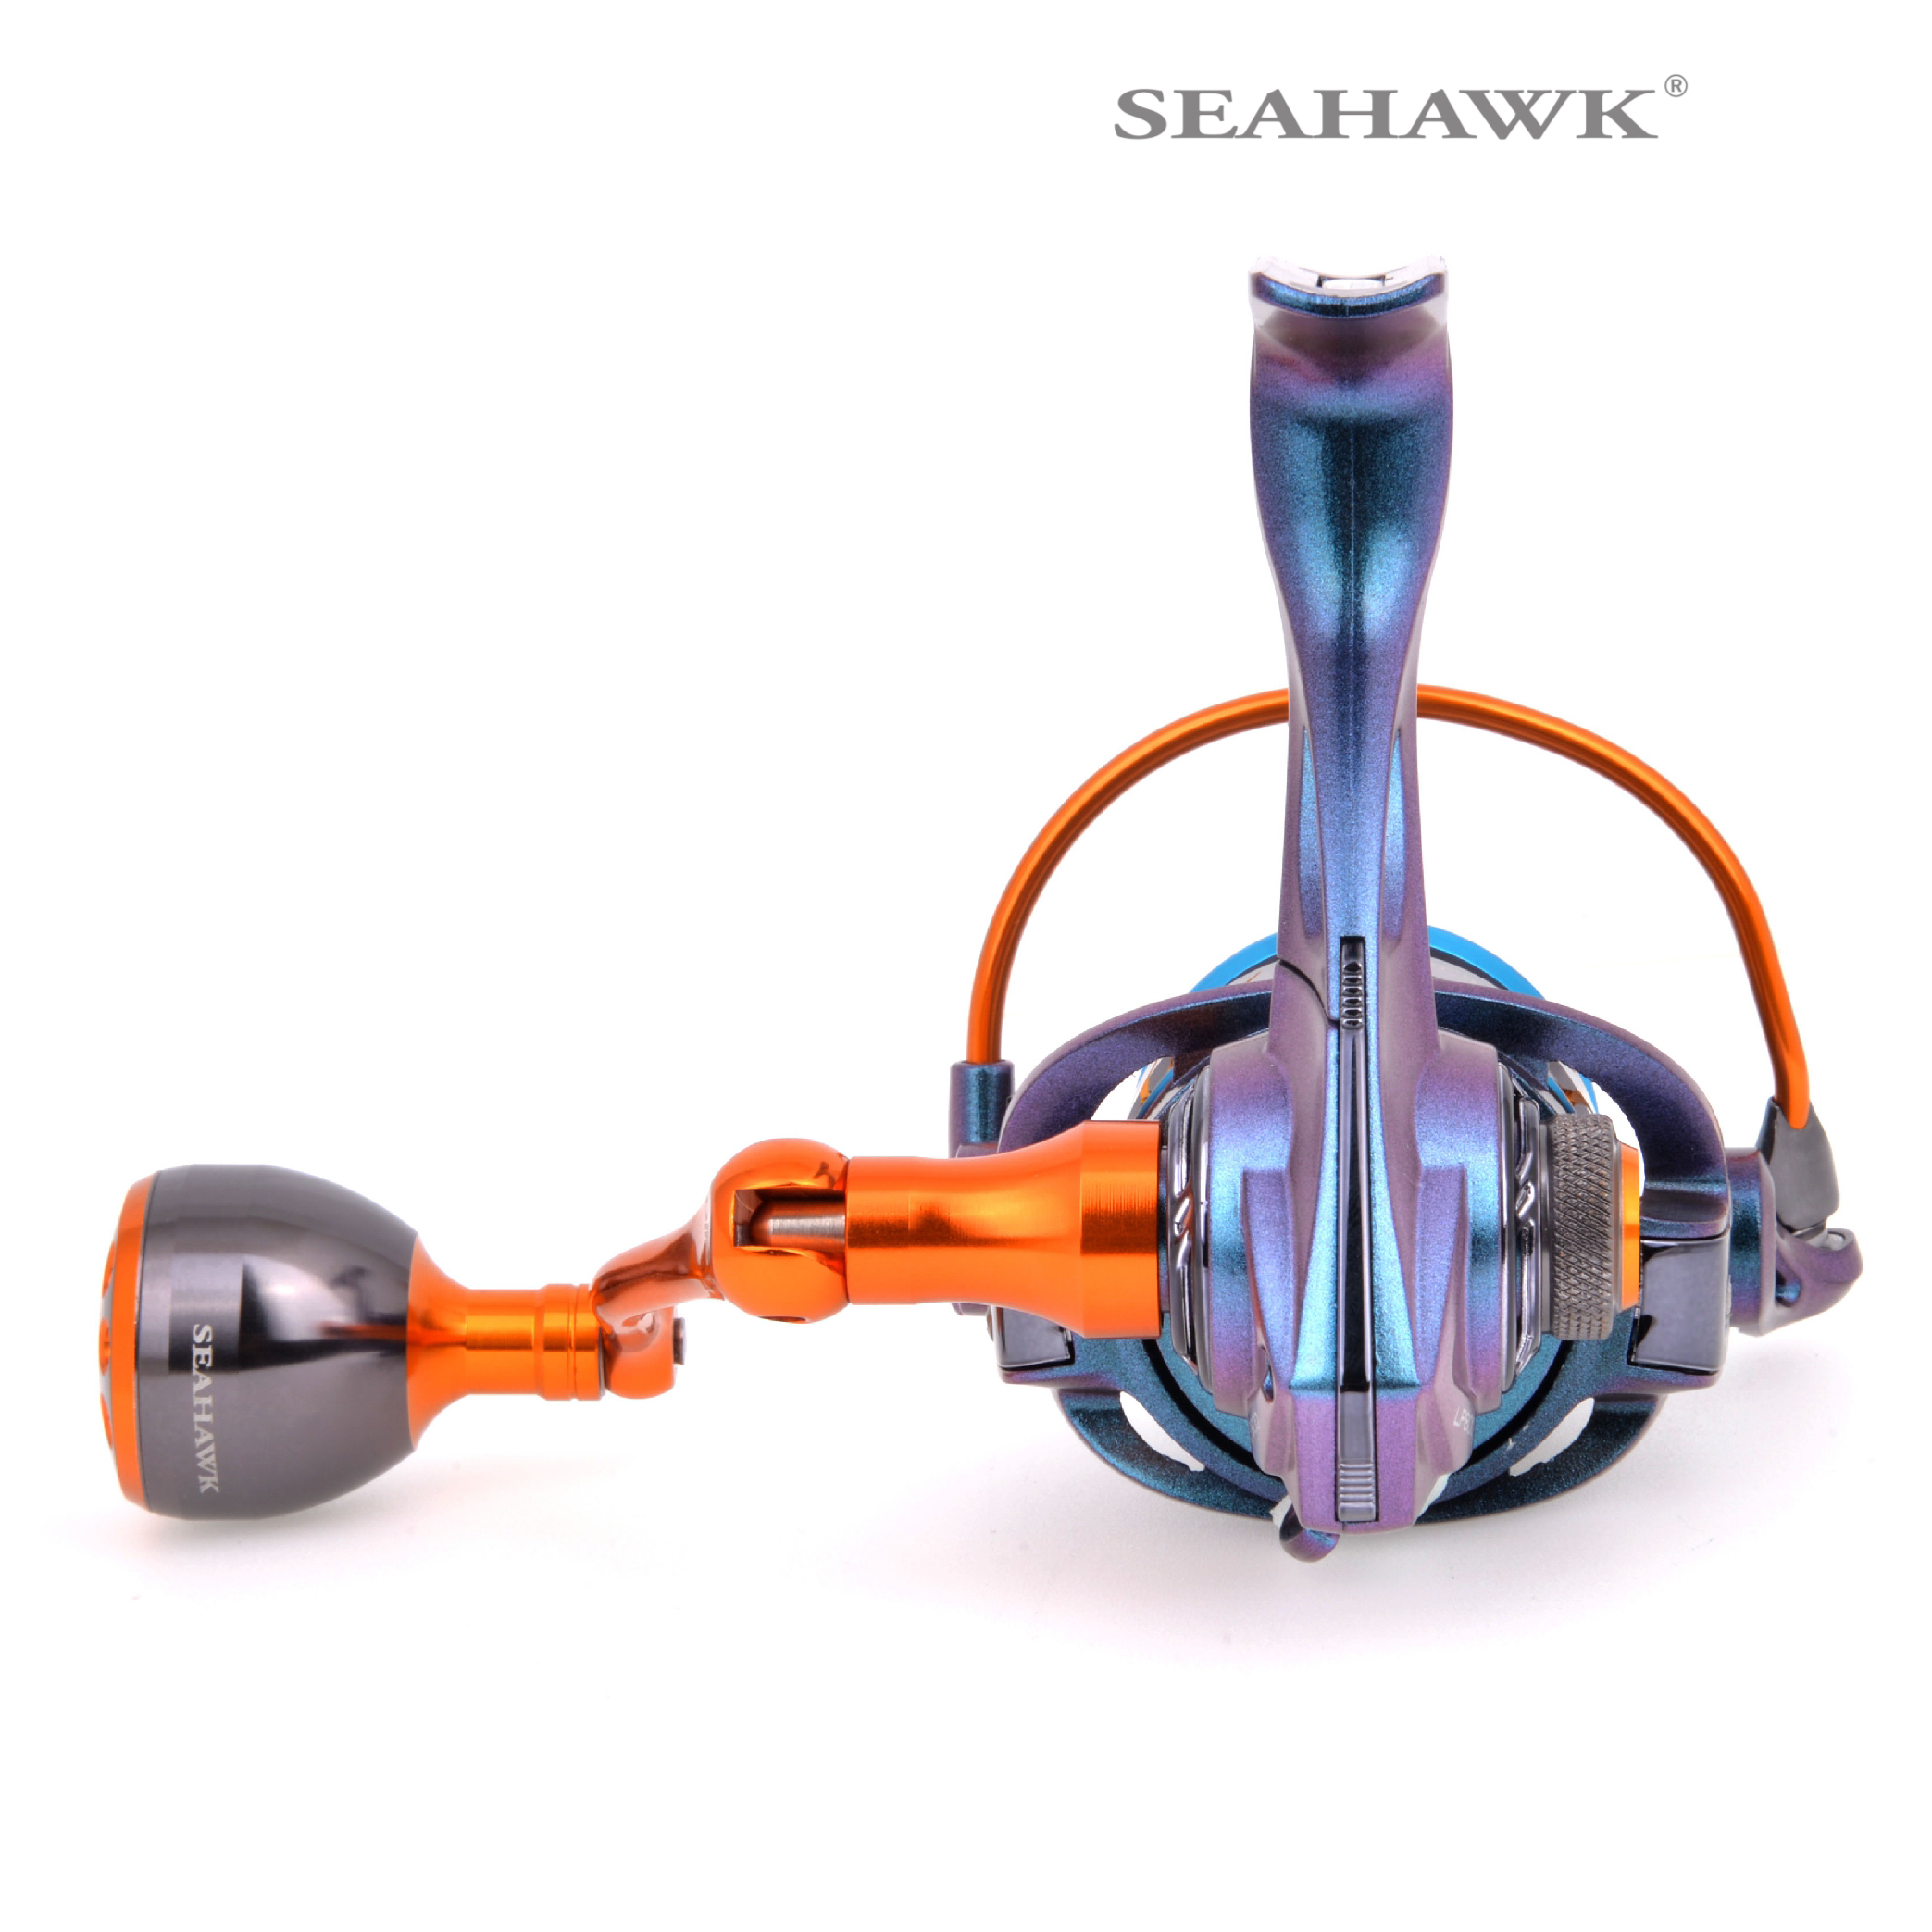 Seahawk Lite Pro LP 02